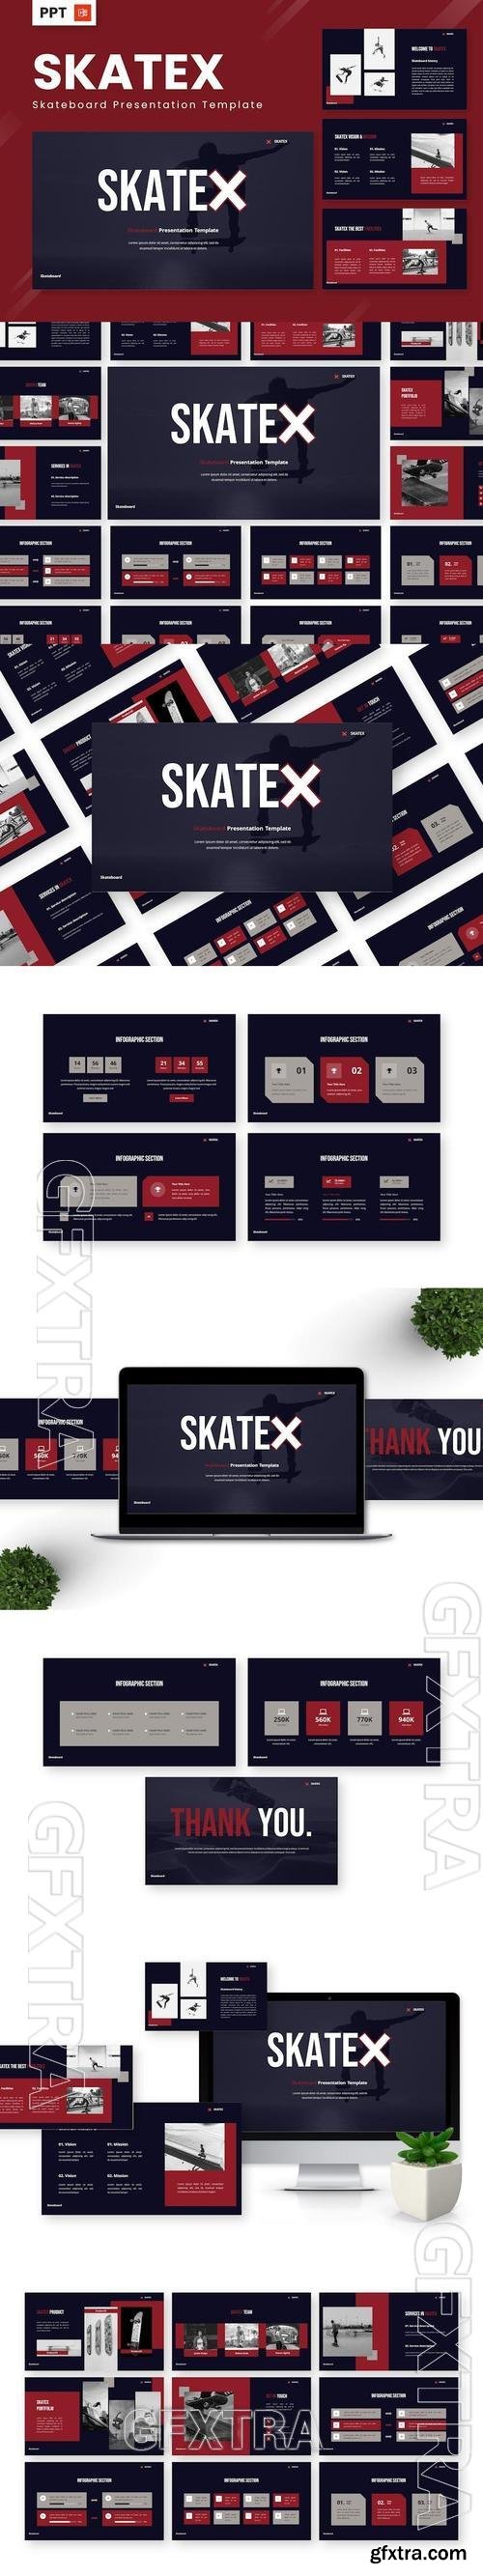 Skatex - Skateboard Powerpoint Templates PFLF29L